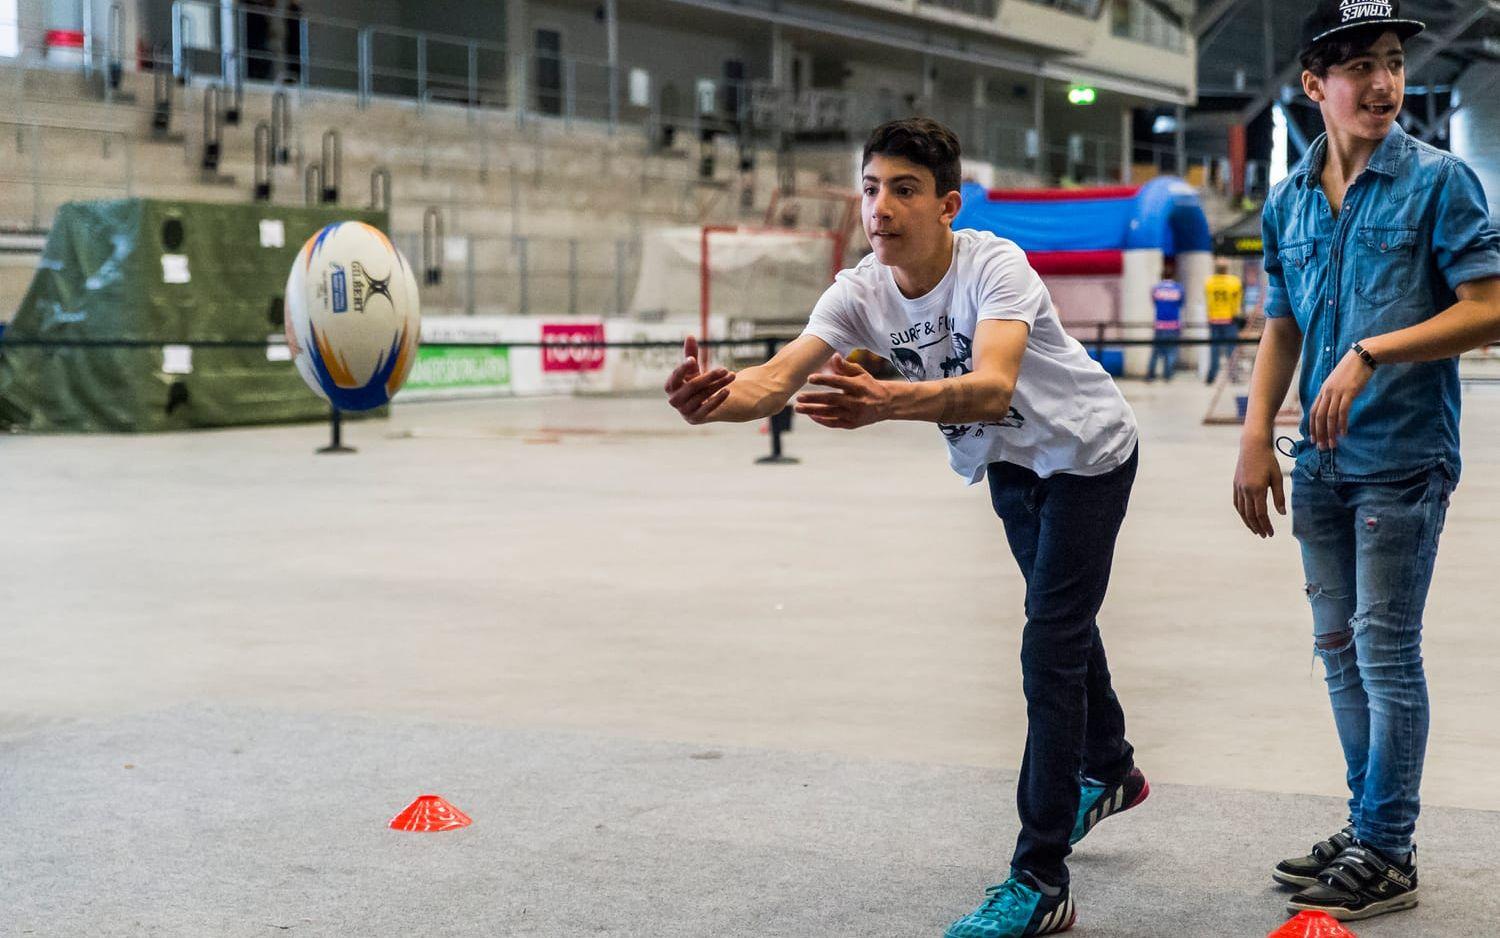 Bild: Christian Flodin. Shuaib Abooun hivar iväg rugbybollen under överseende av Hayman Satar.